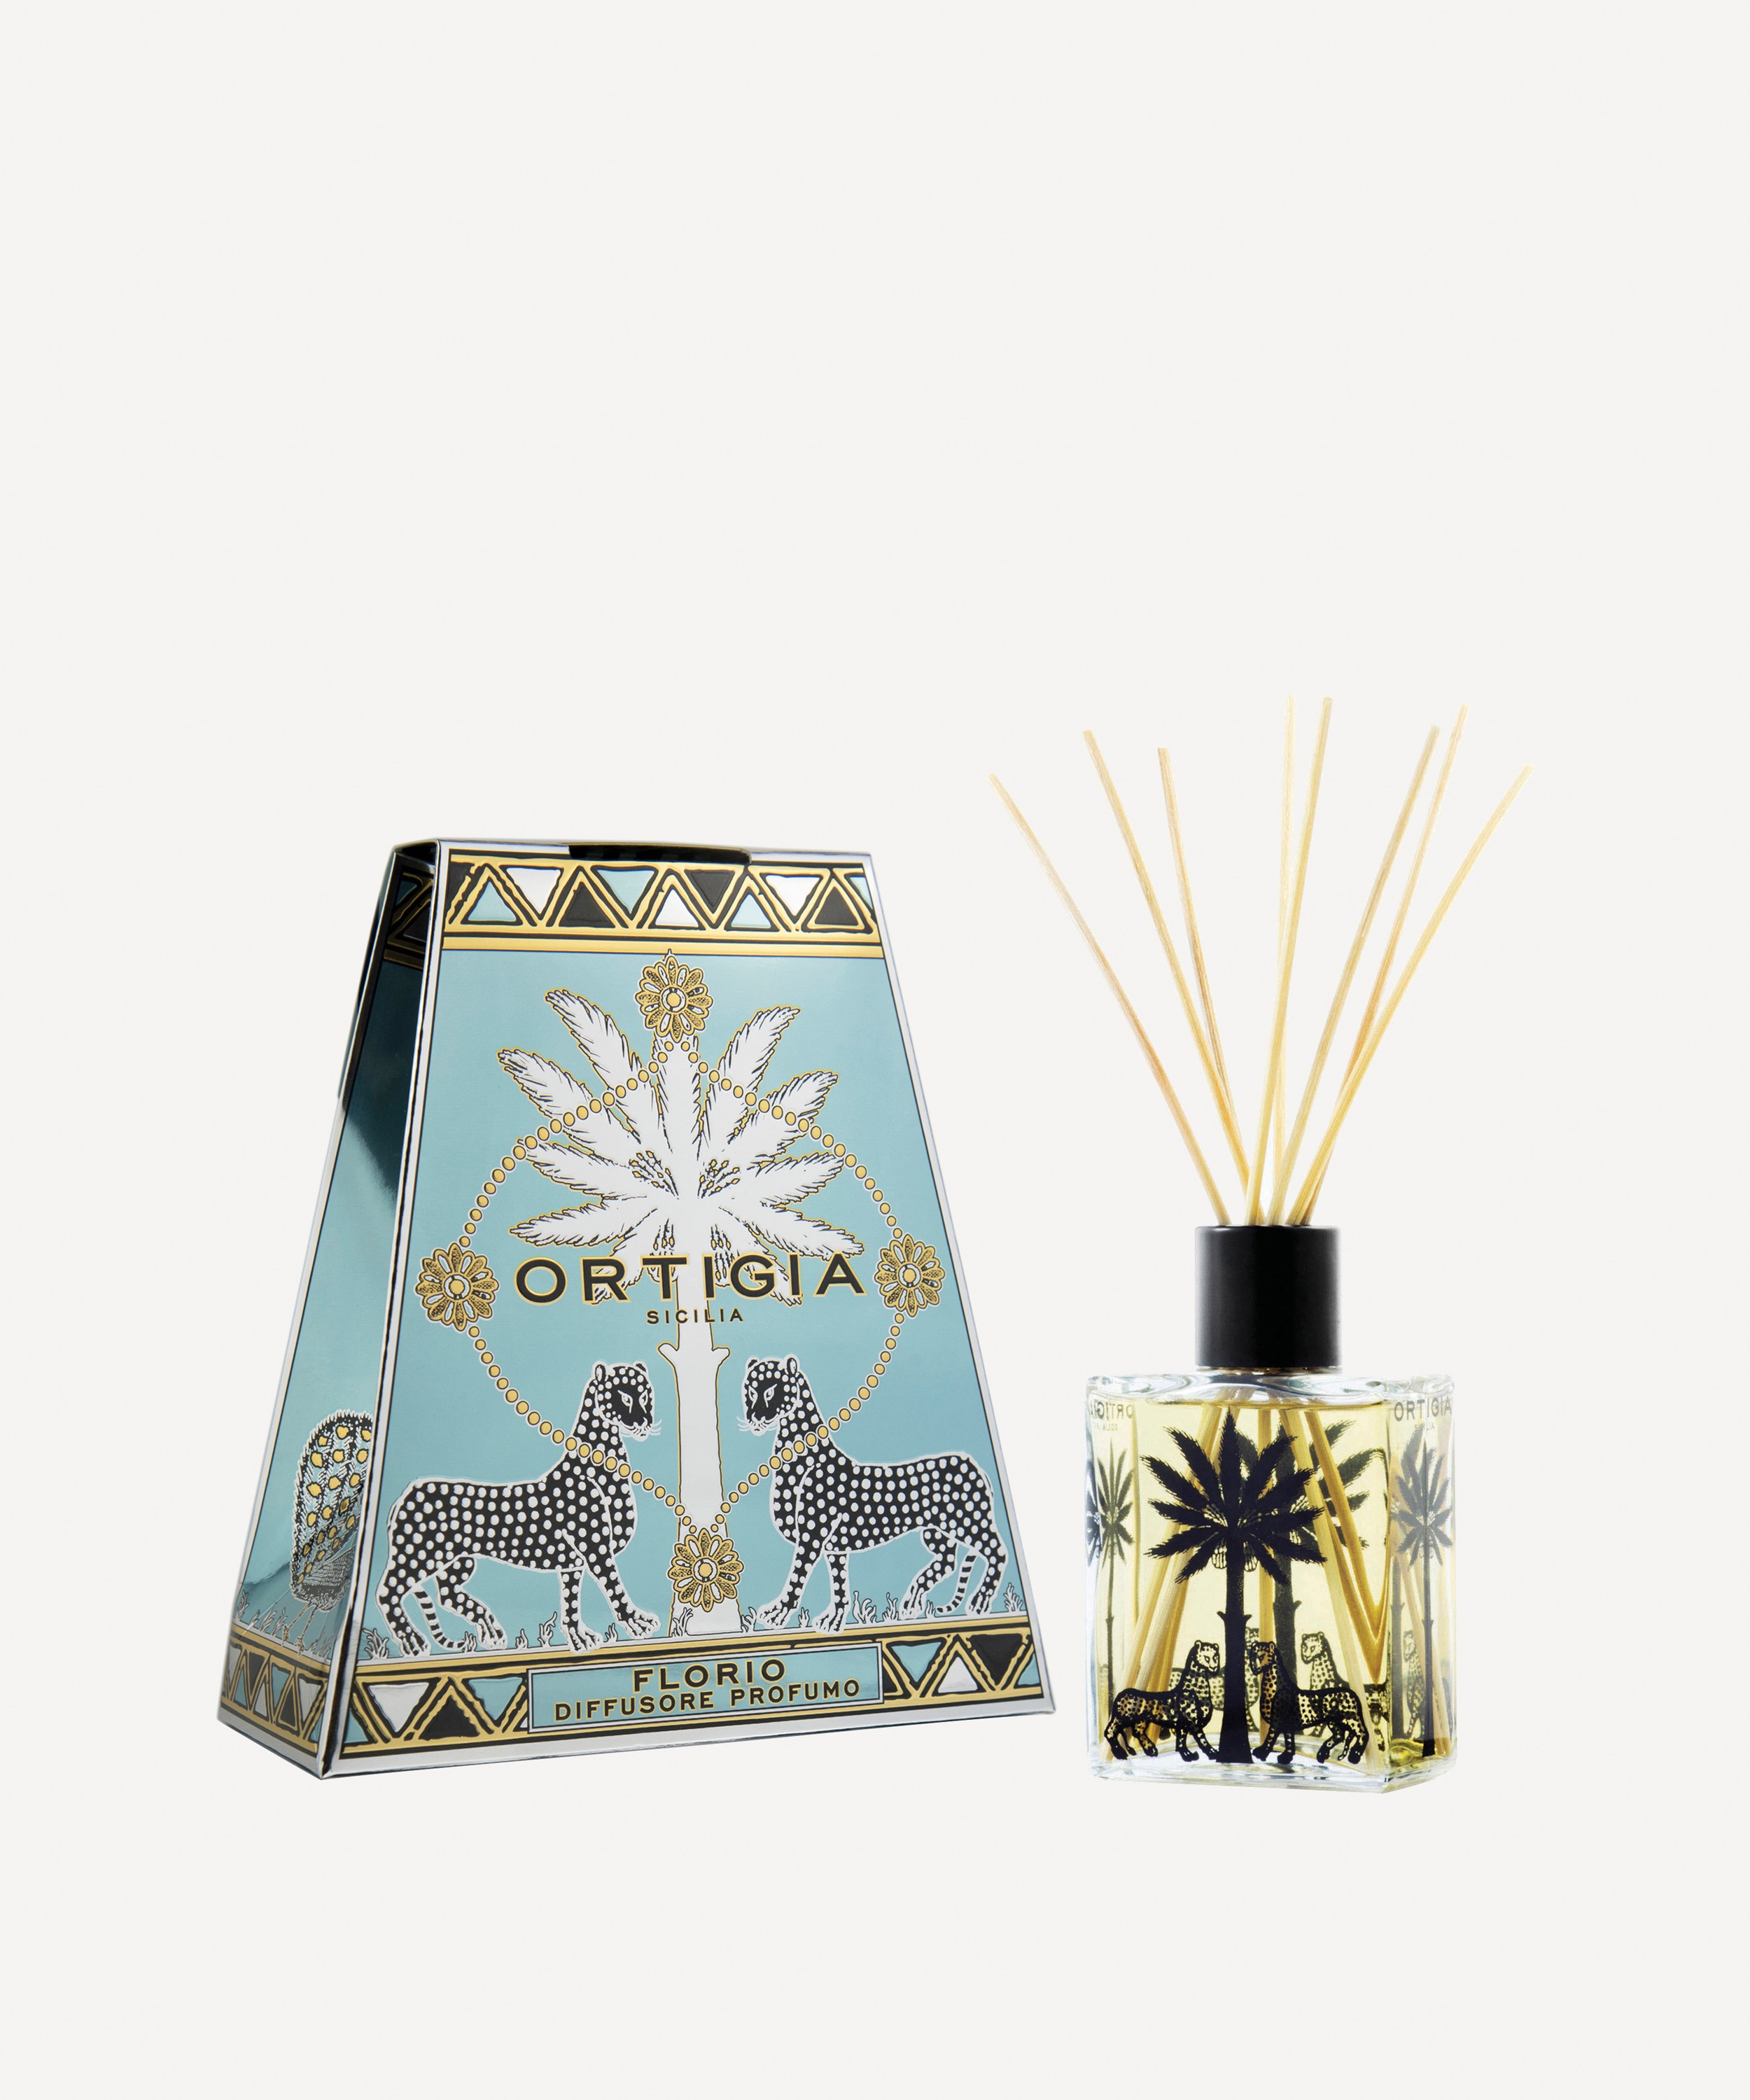 Ortigia - Florio Perfume Diffuser 200ml